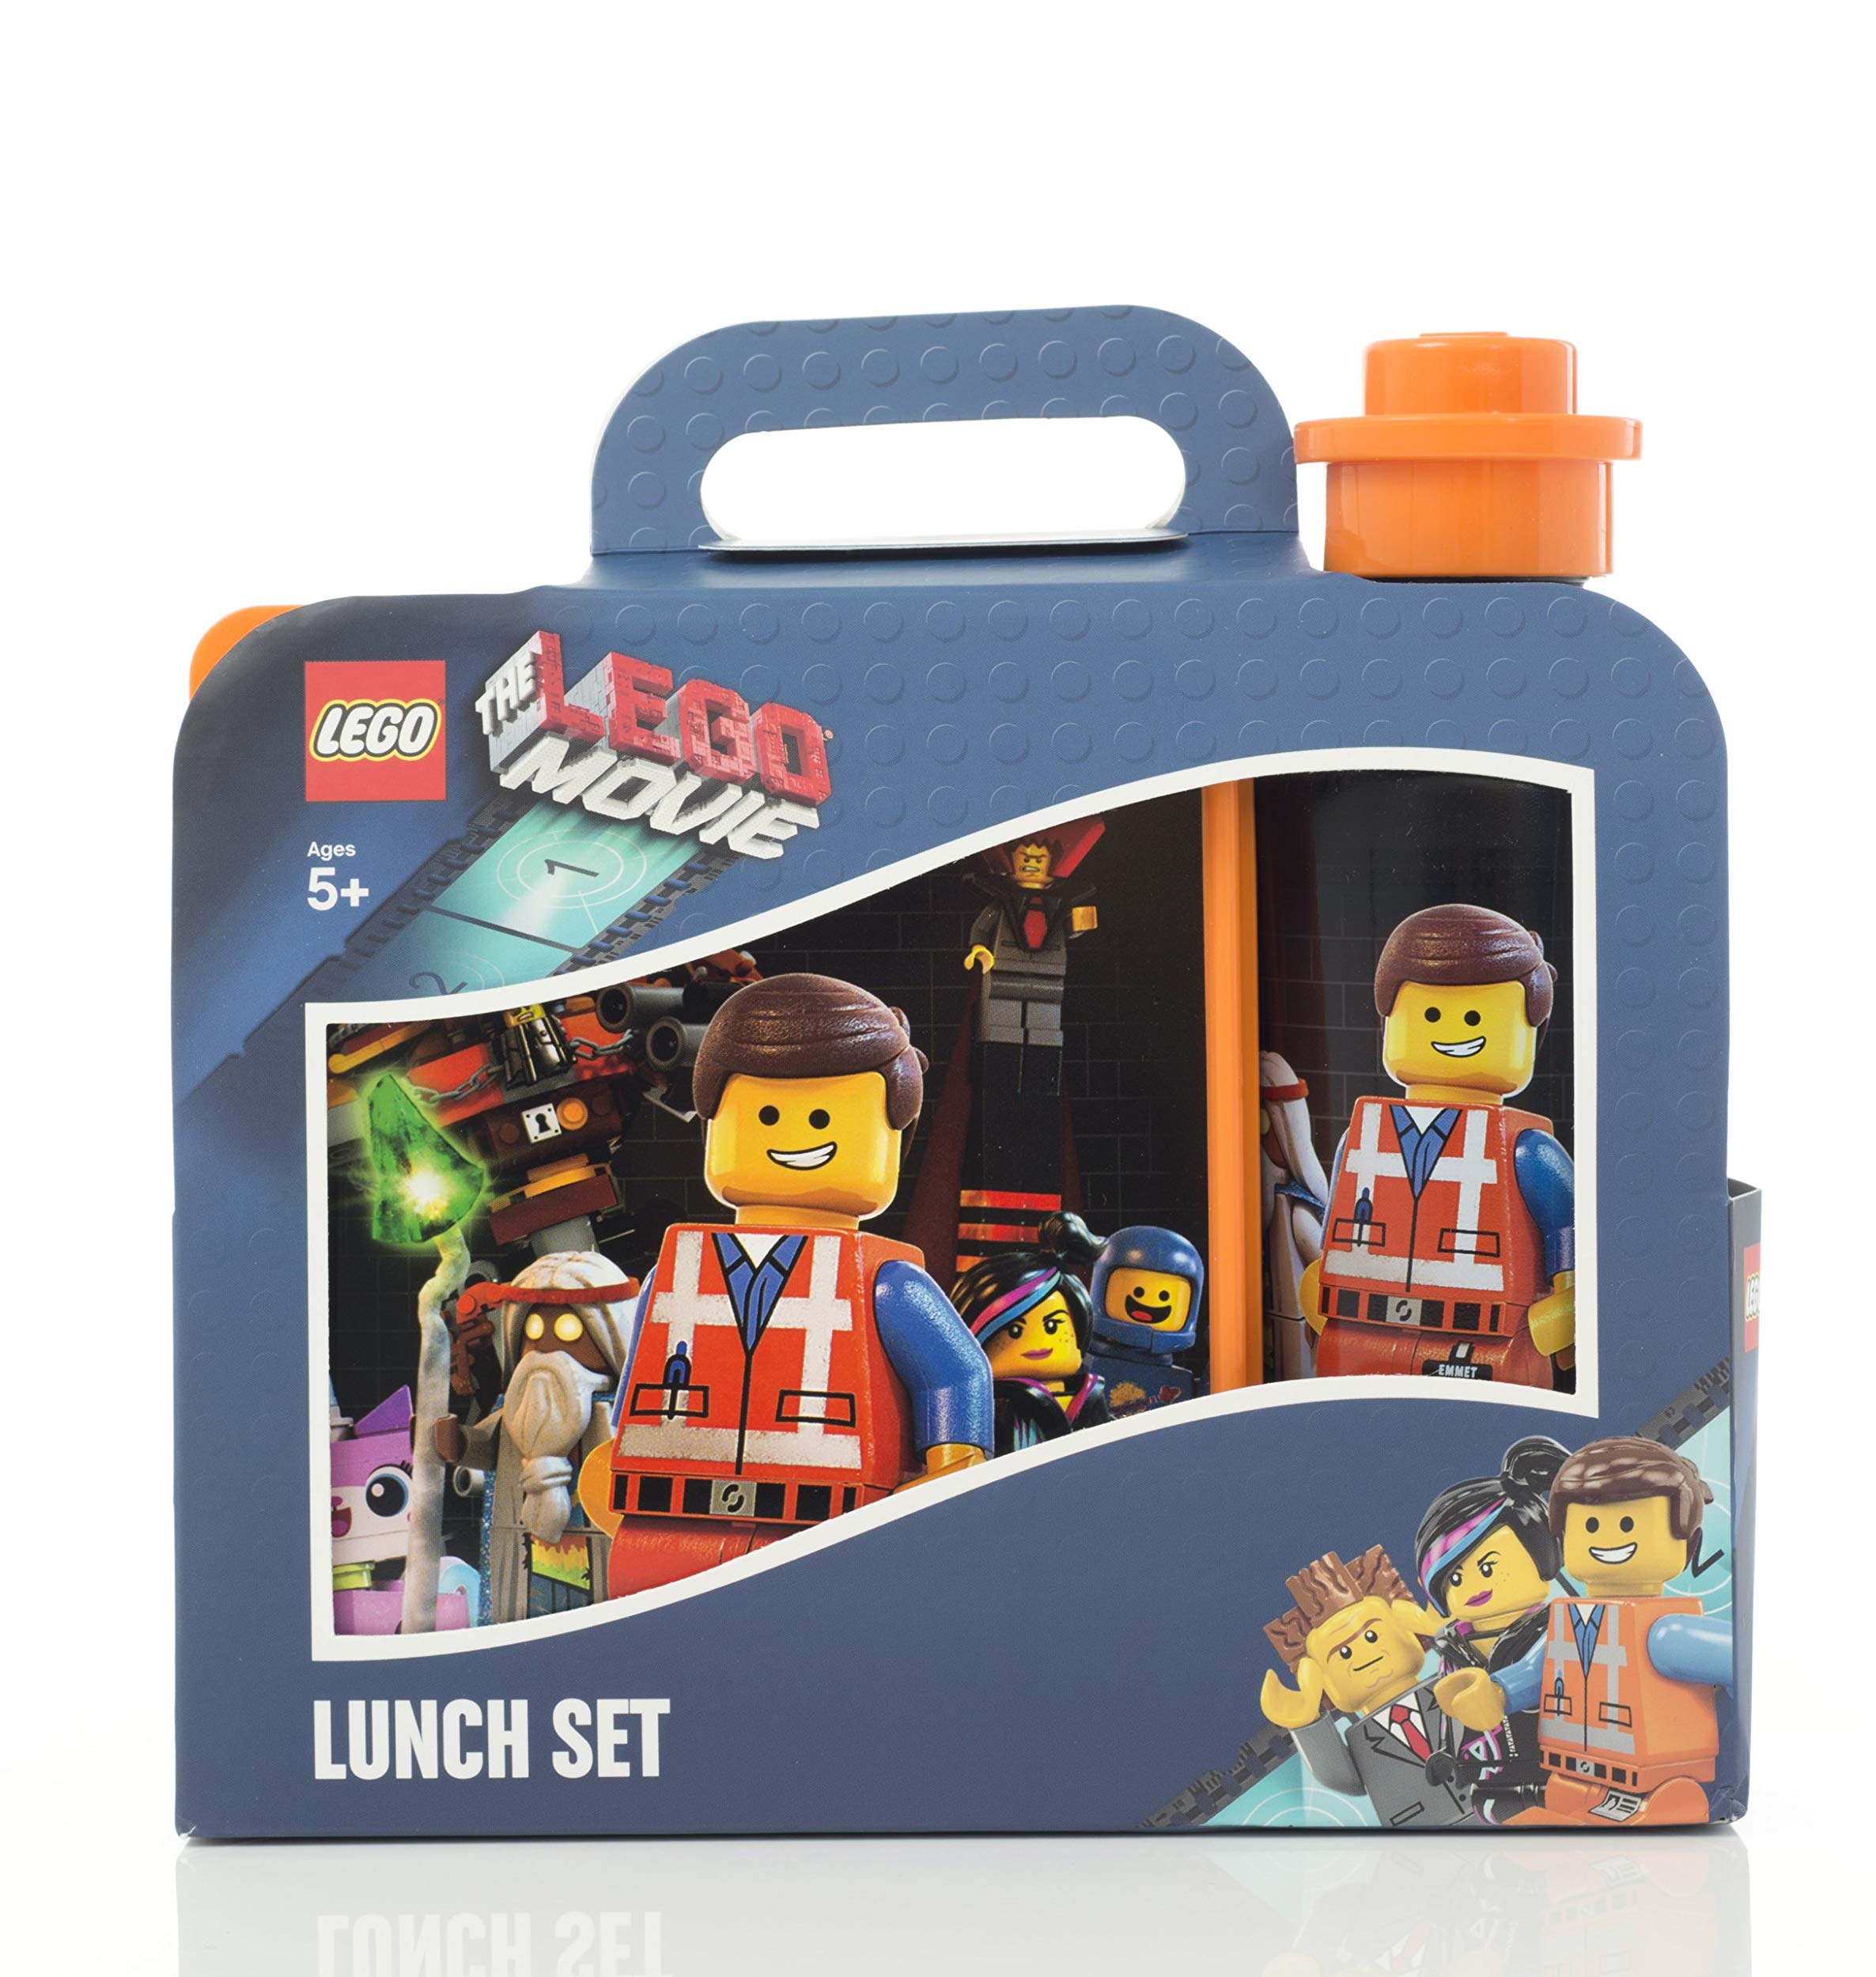 Lego Movie Lunch Set